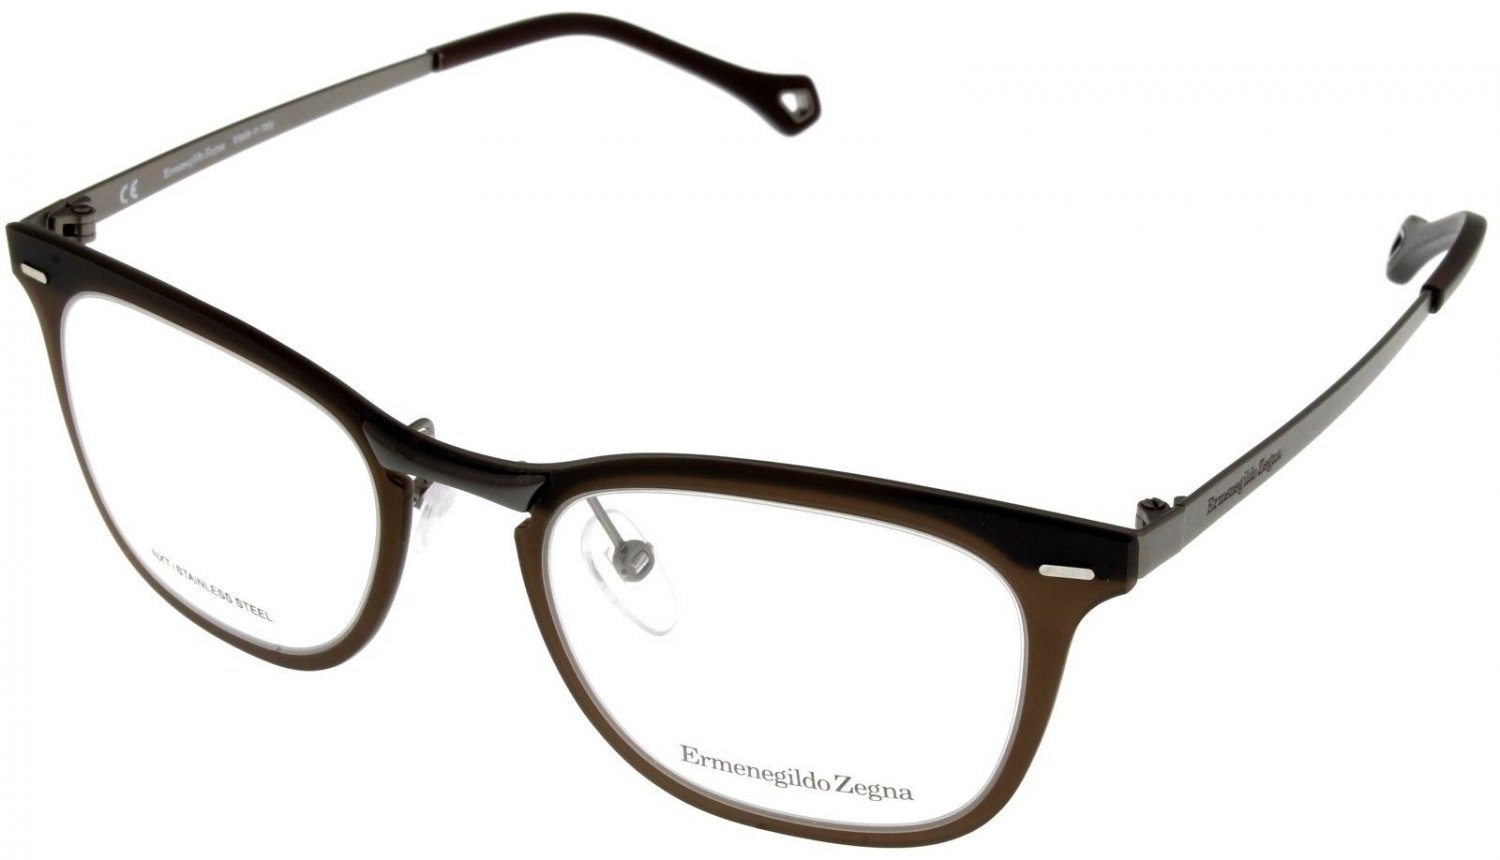 Ermenegildo Zegna Unisex Prescription Eyeglasses Frame Black Square ...